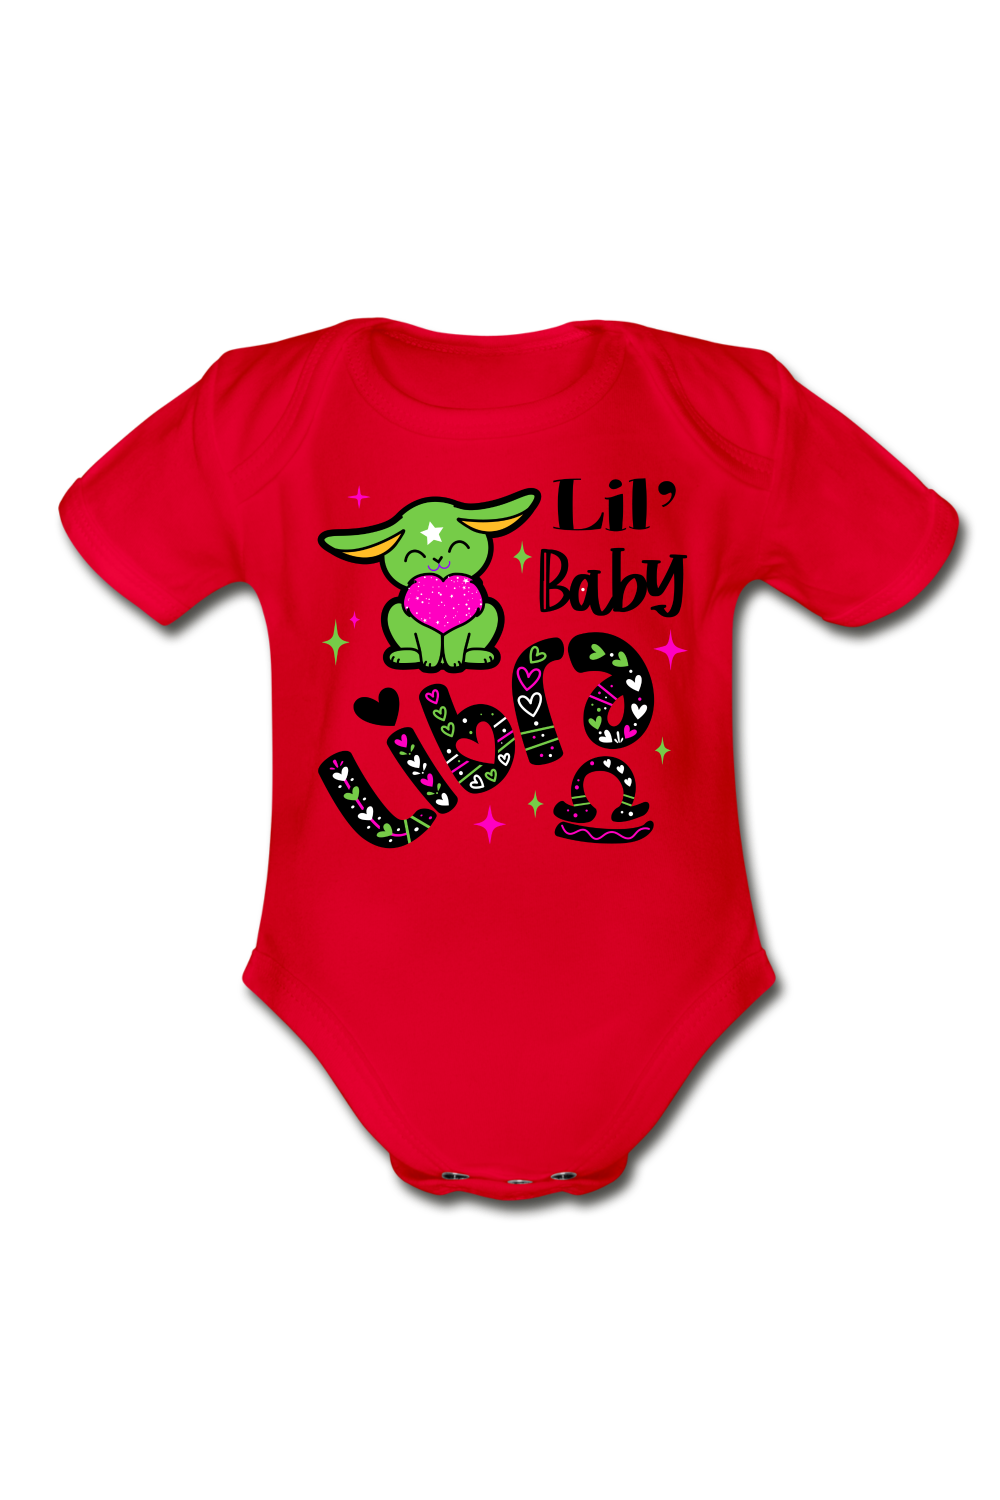 Unisex Baby Libra Short Sleeve Baby Bodysuit - red